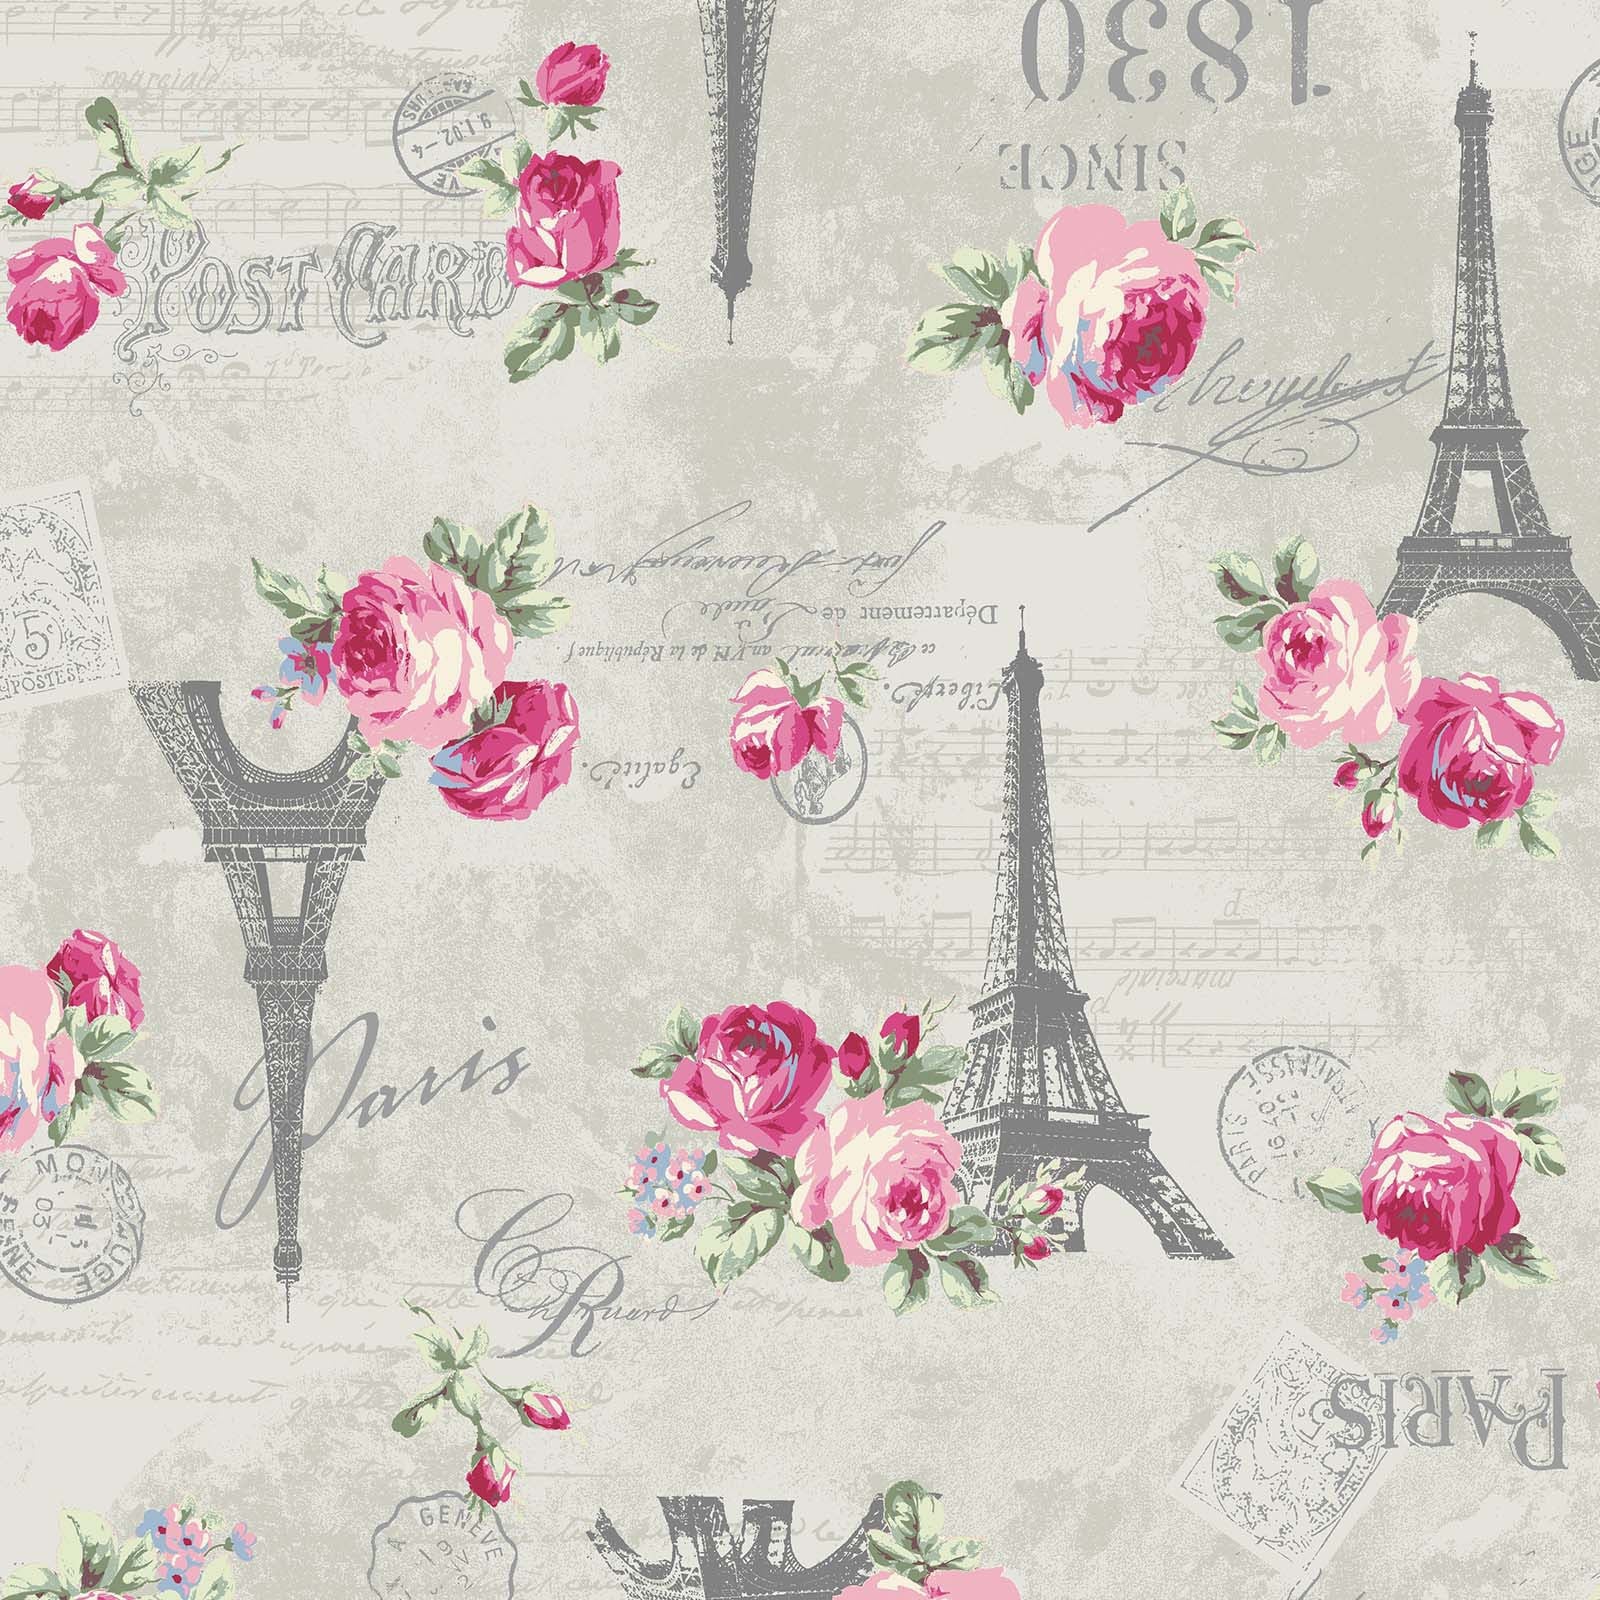 Ruru Rose Bouquet in Paris cotton fabric by Quilt Gate Ru2370-12B Eiffel Tower Roses on Gray